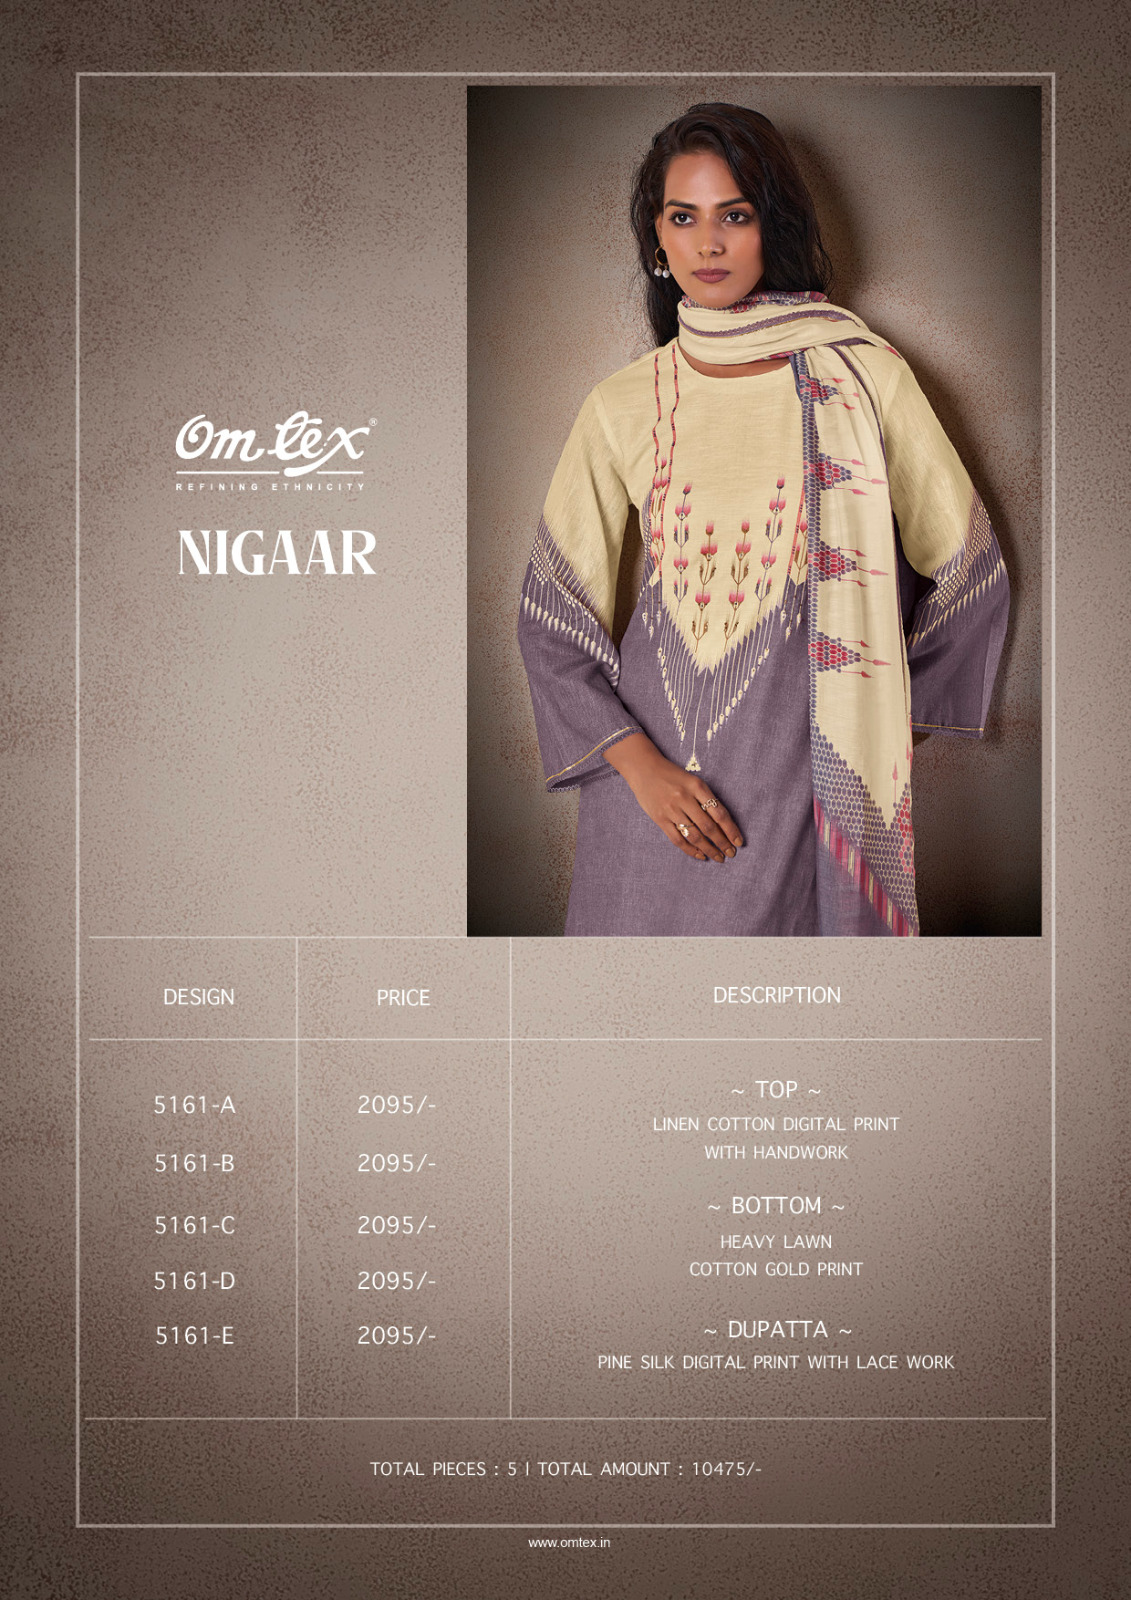 Omtex Nigaar collection 1